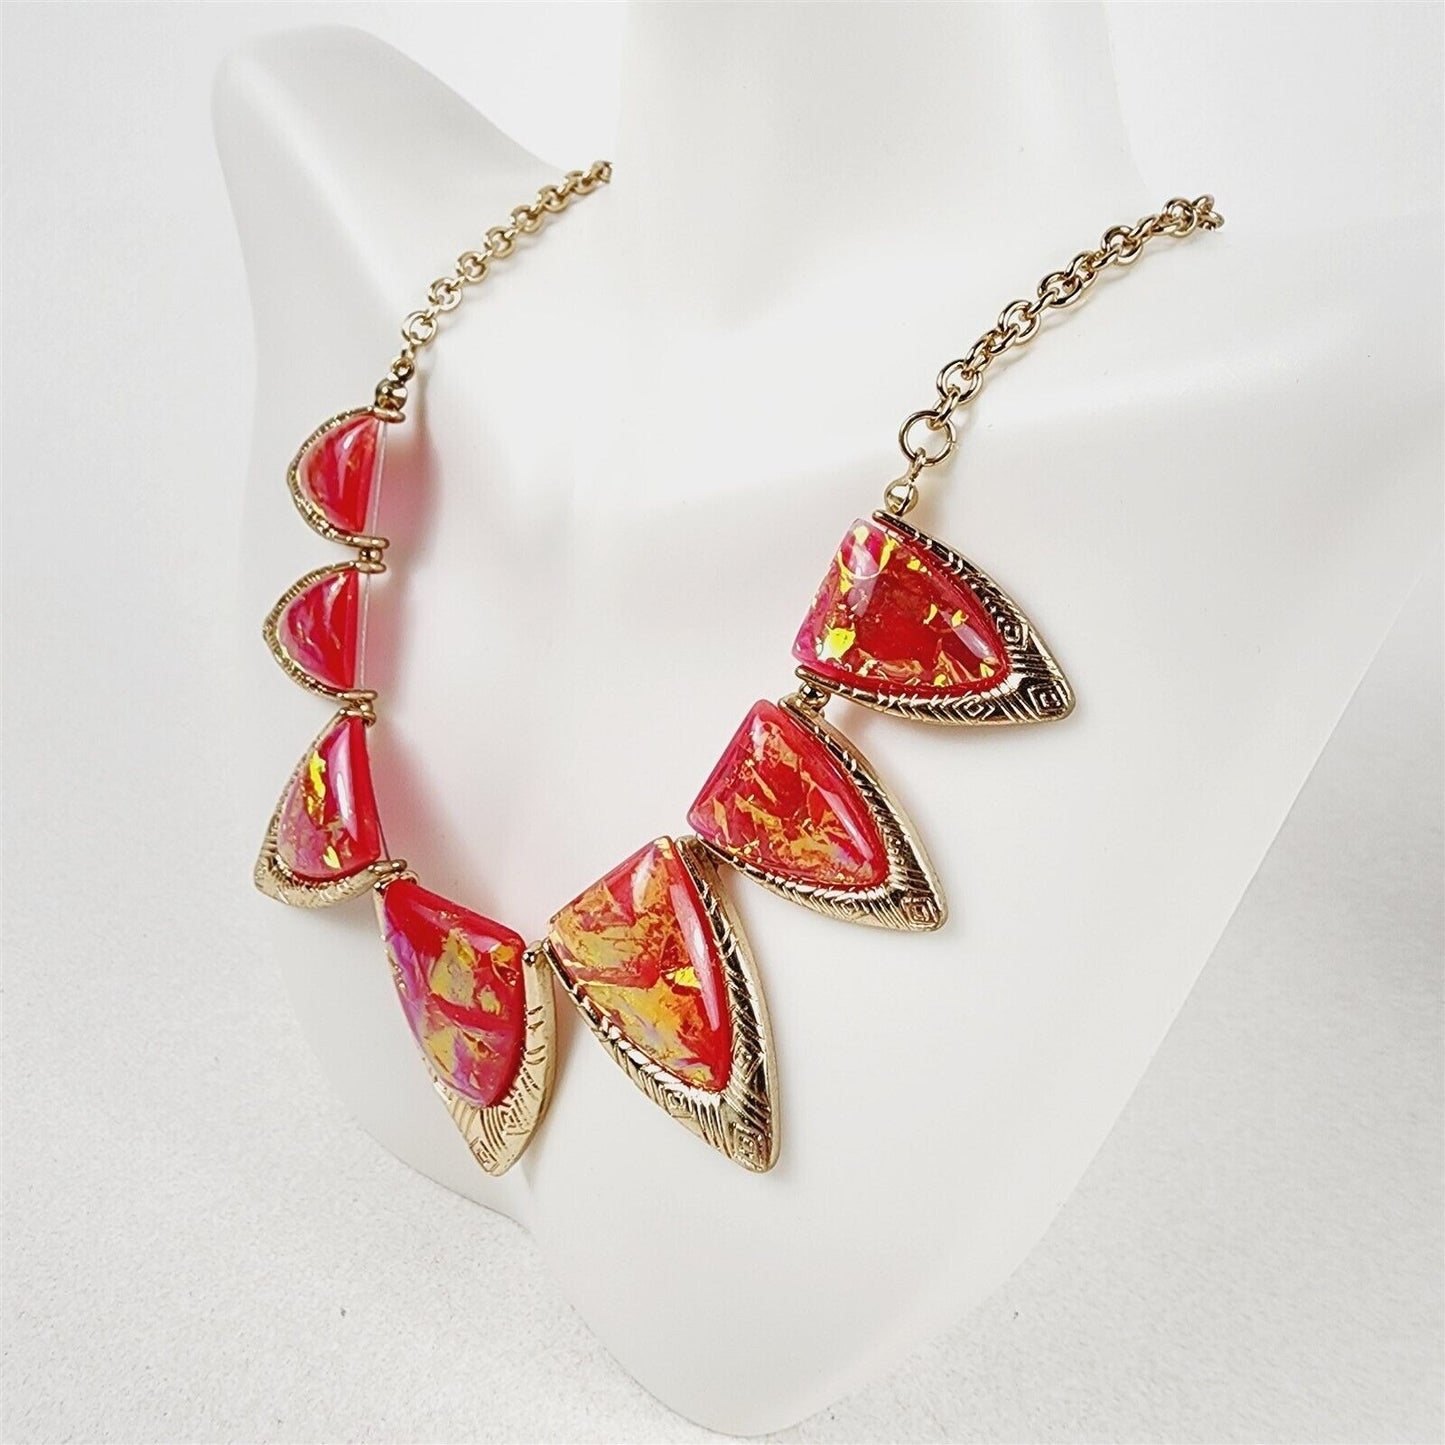 Red Orange Fire Triangle Necklace Earrings Fashion Jewelry Set